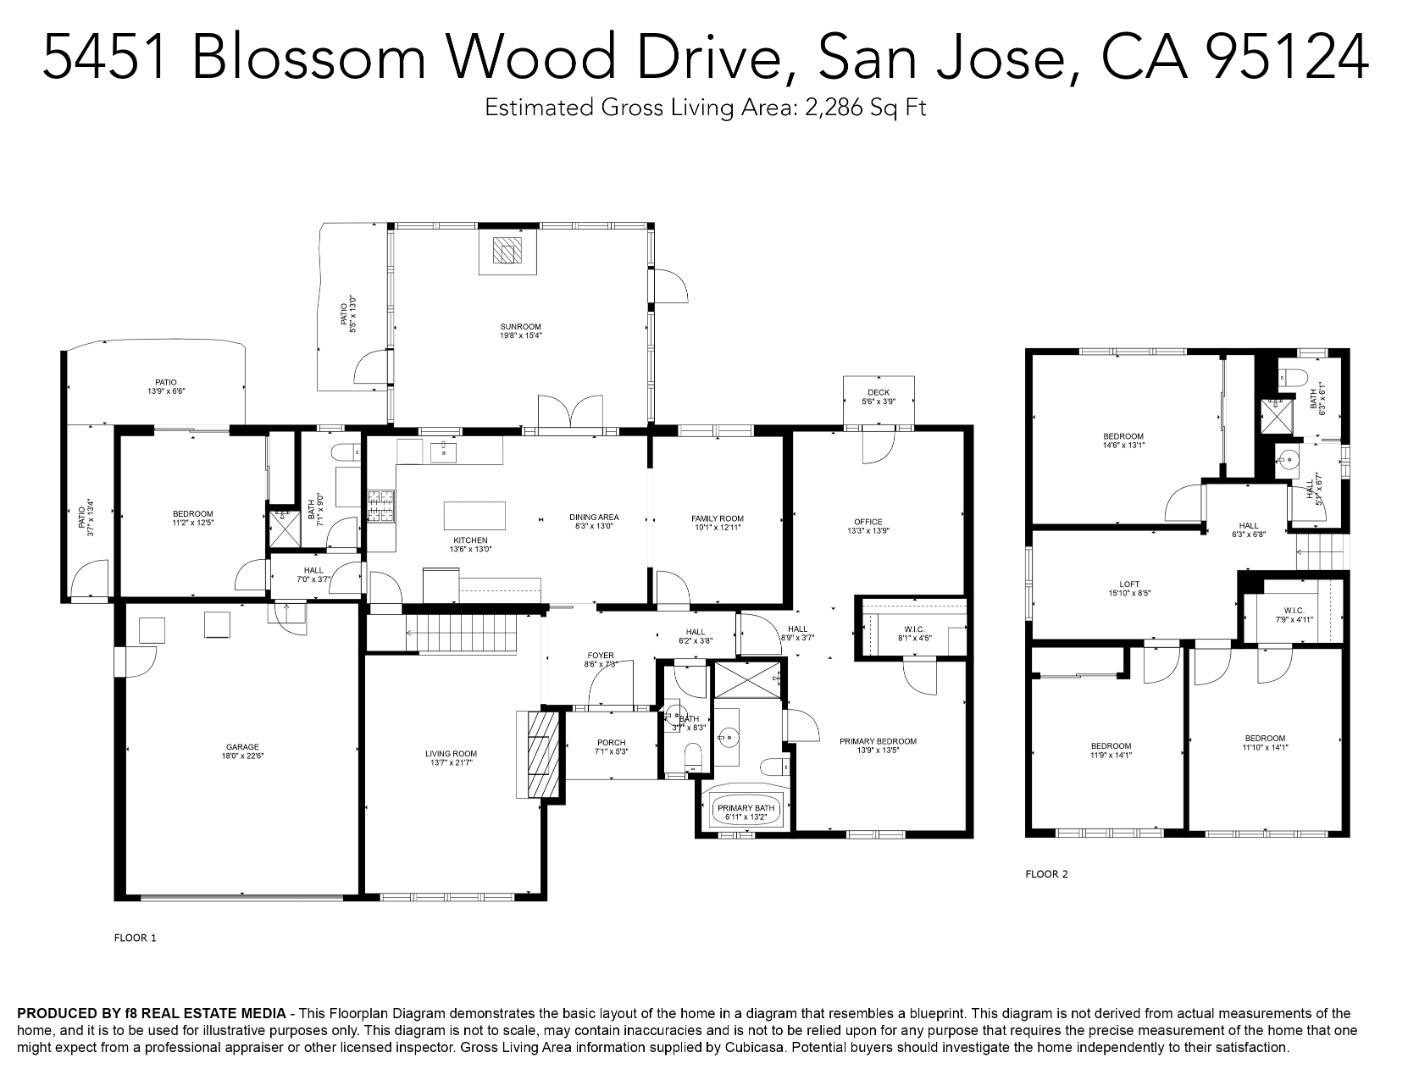 50. 5451 Blossom Wood Dr